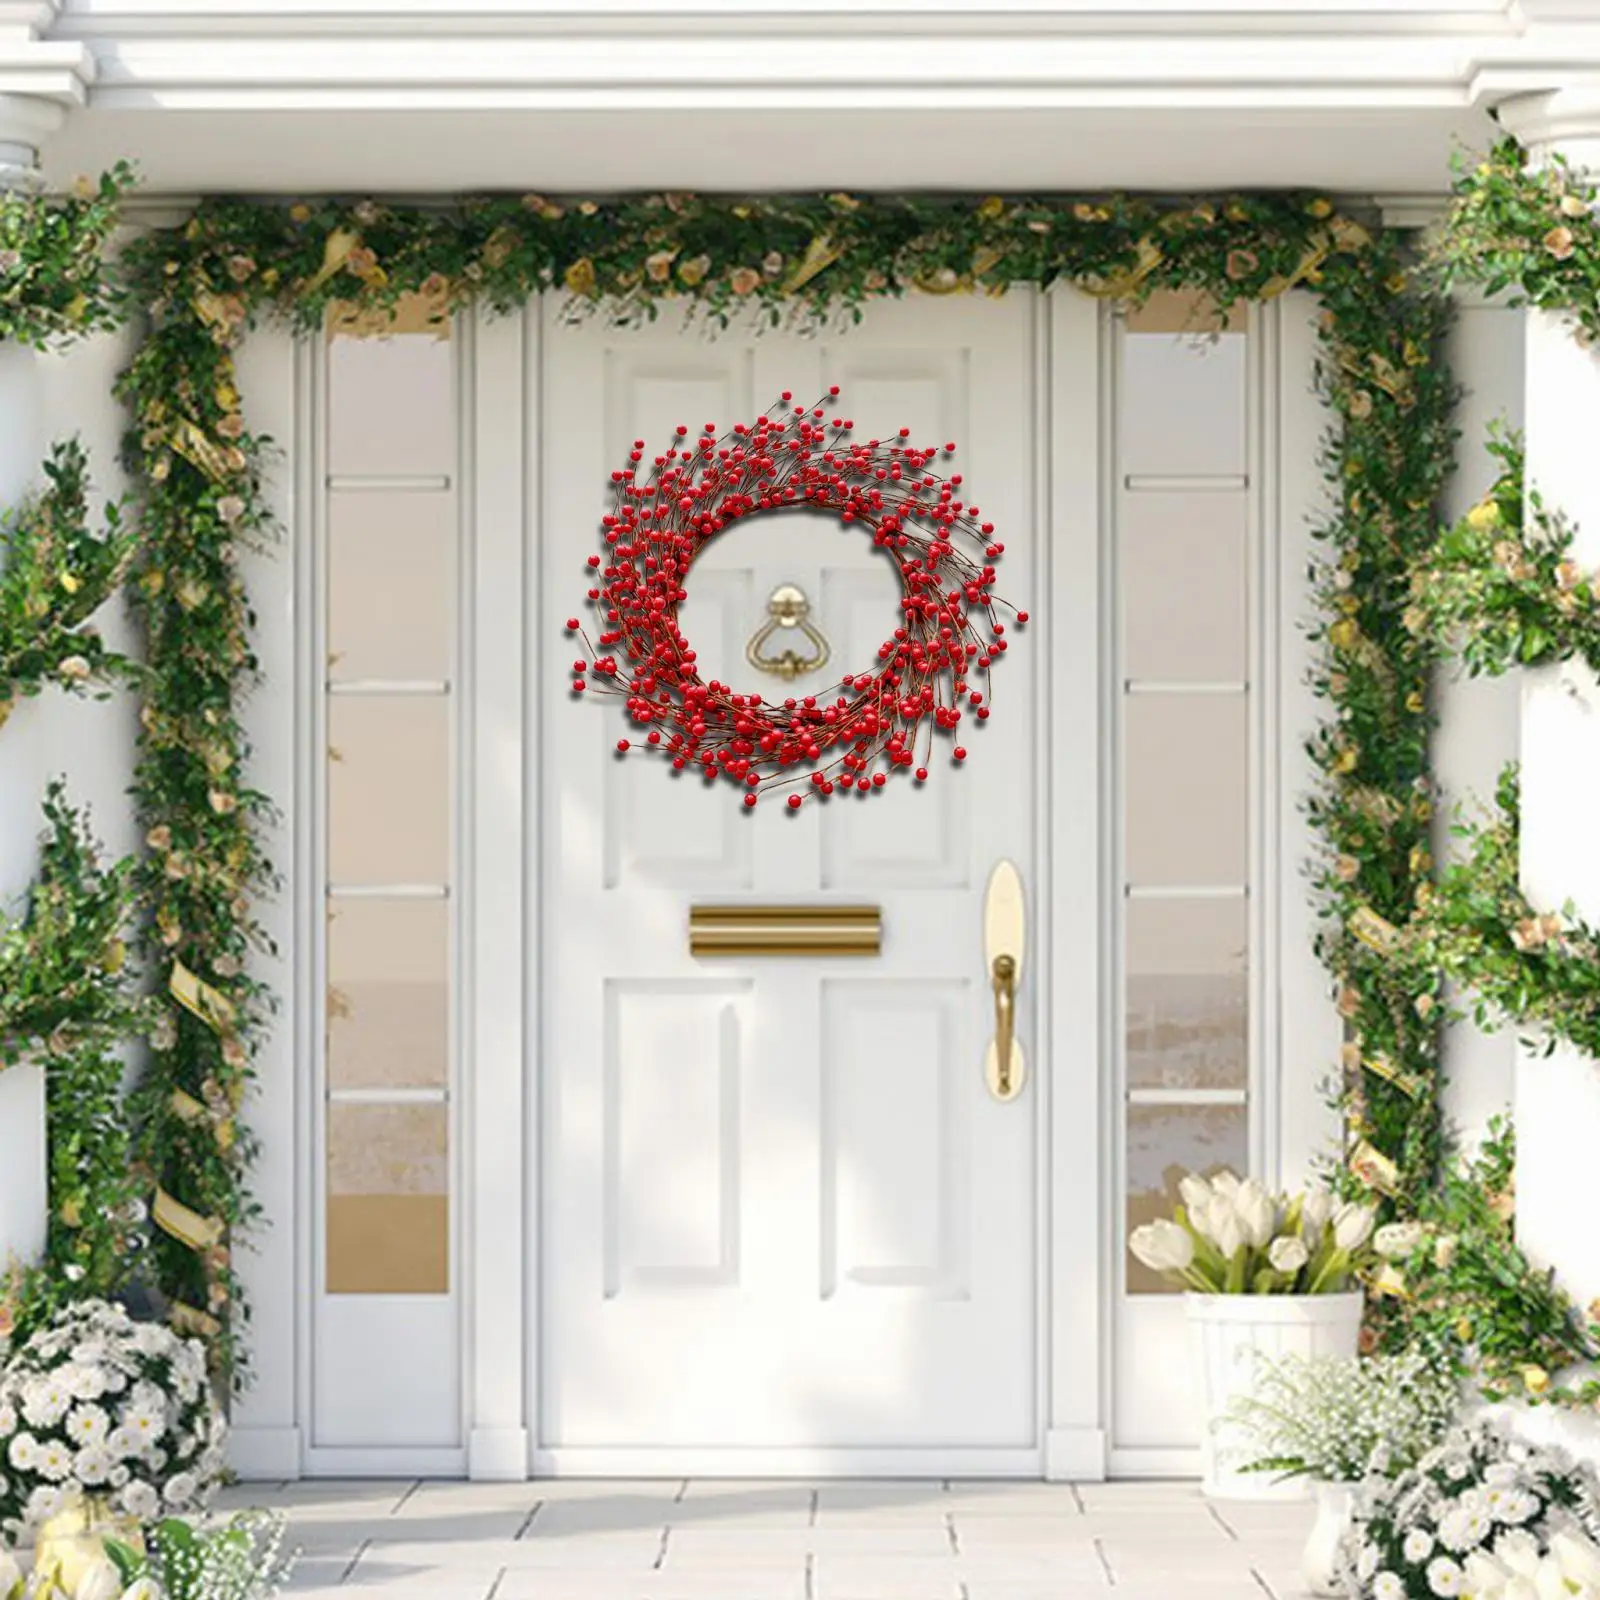 Christmas Door Wreath Holiday Party Decor Winter Wreath Decor Front Door Christmas Wreath for Wedding Farmhouse Wall Indoor Xmas